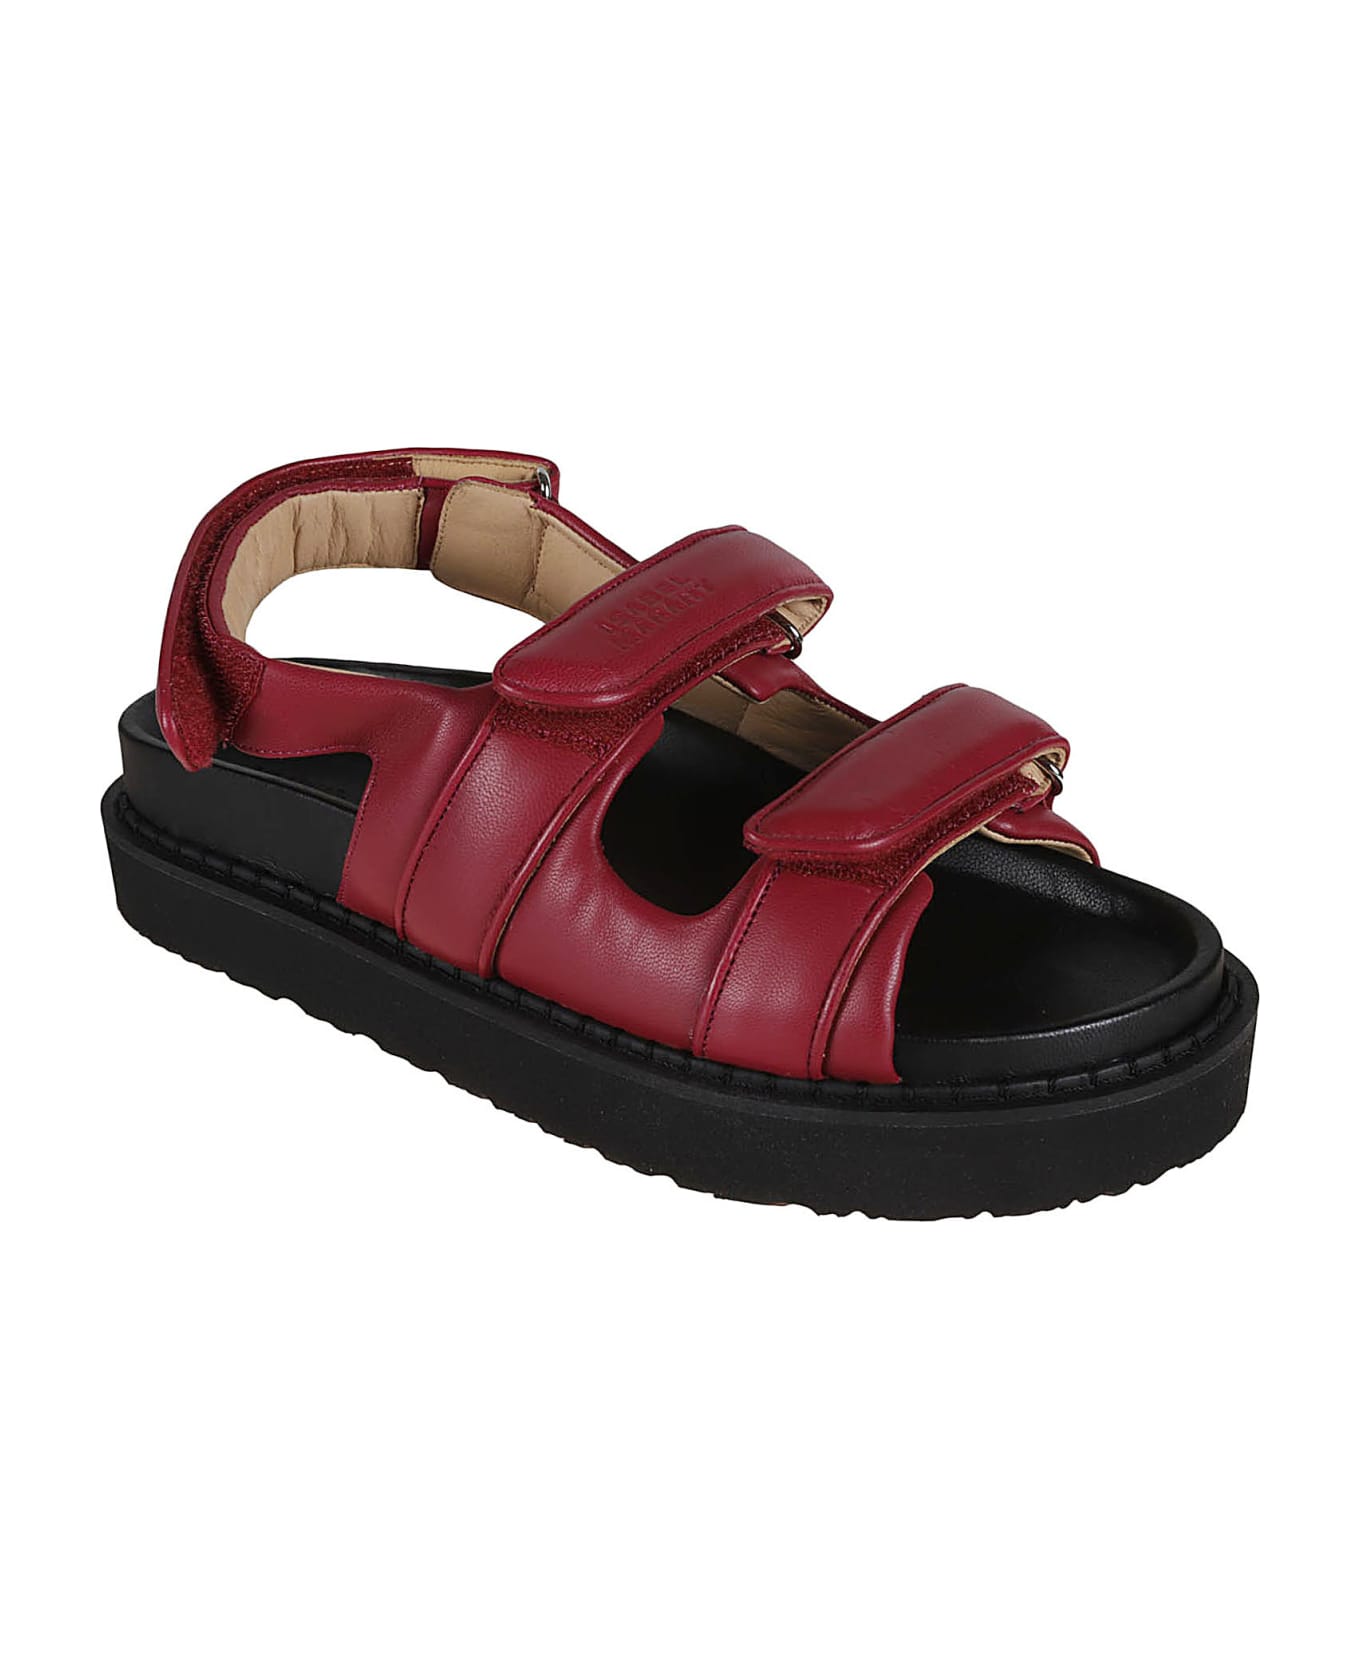 Isabel Marant Leather Padded Sandals - Raspberry サンダル